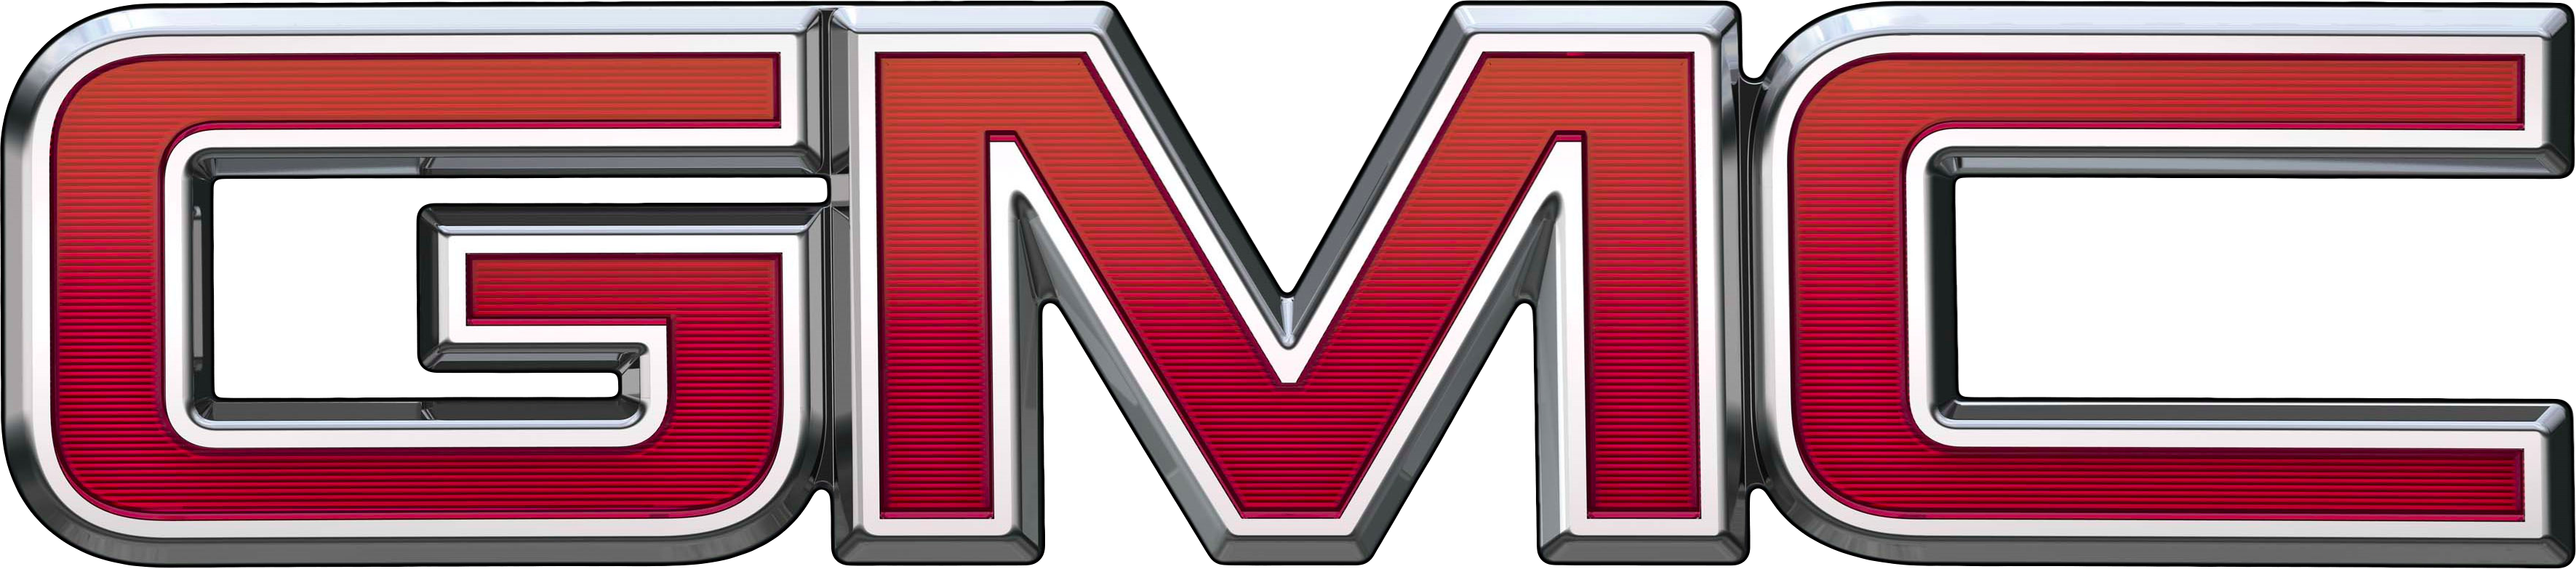 Image result for car gmc logo